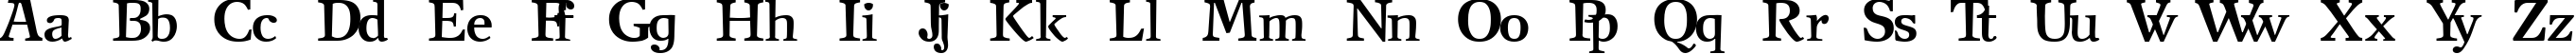 Пример написания английского алфавита шрифтом NewJournal Cyrillic Bold